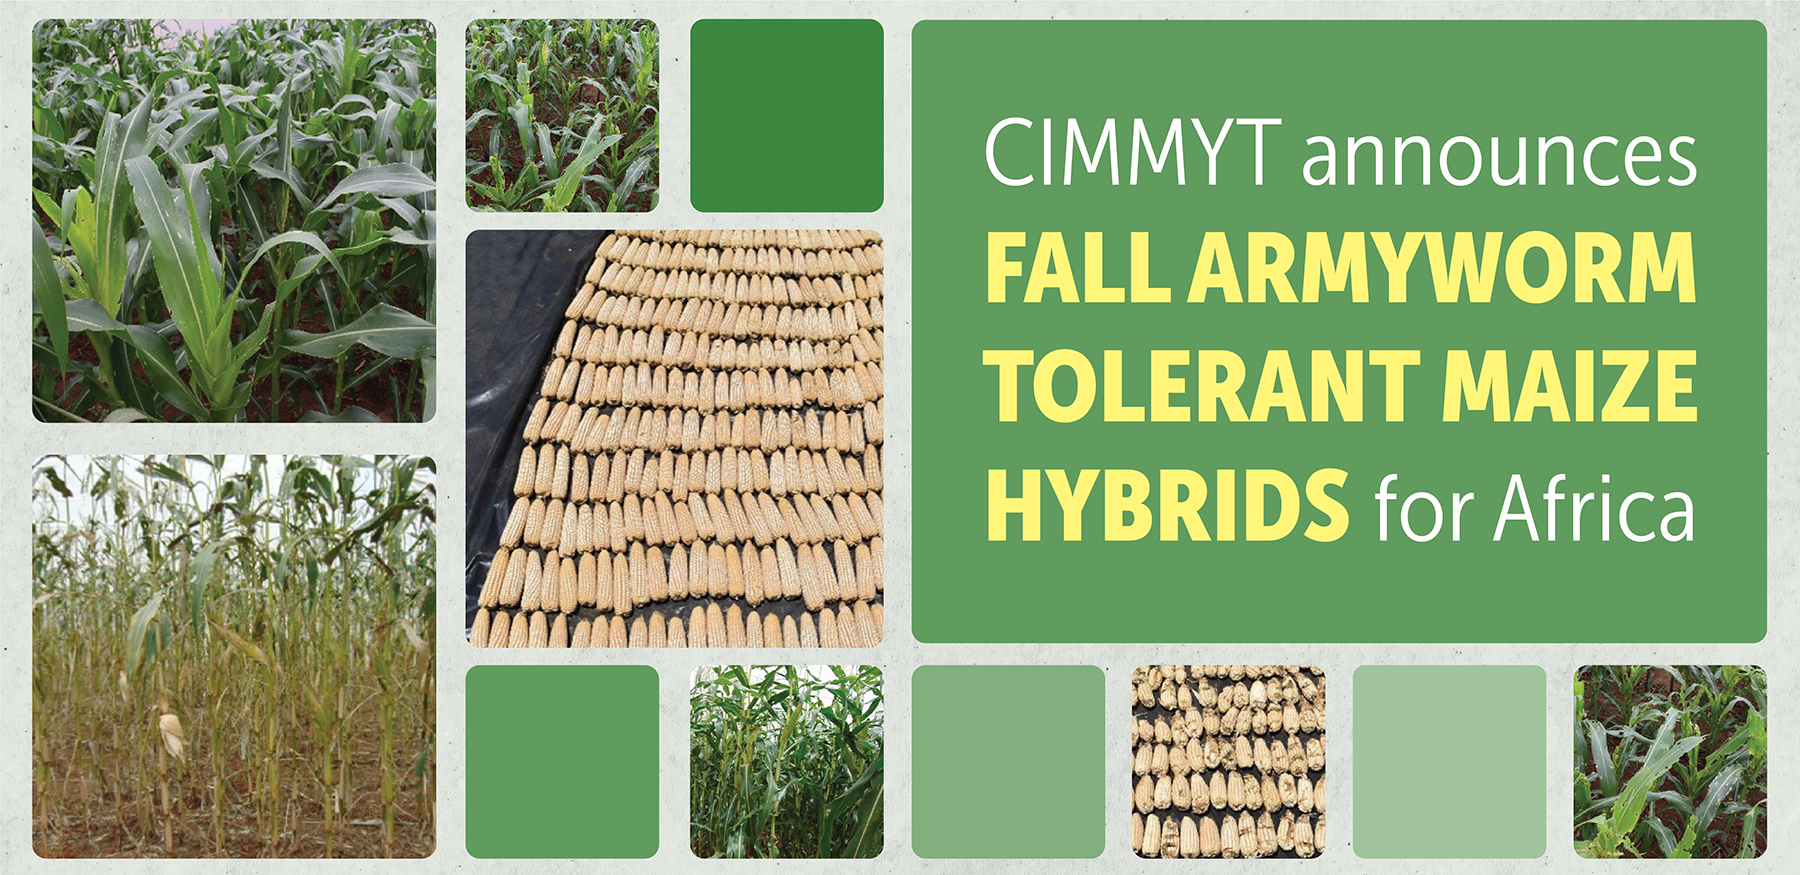 CIMMYT announced fall armyworm-tolerant maize hybrids for Africa.